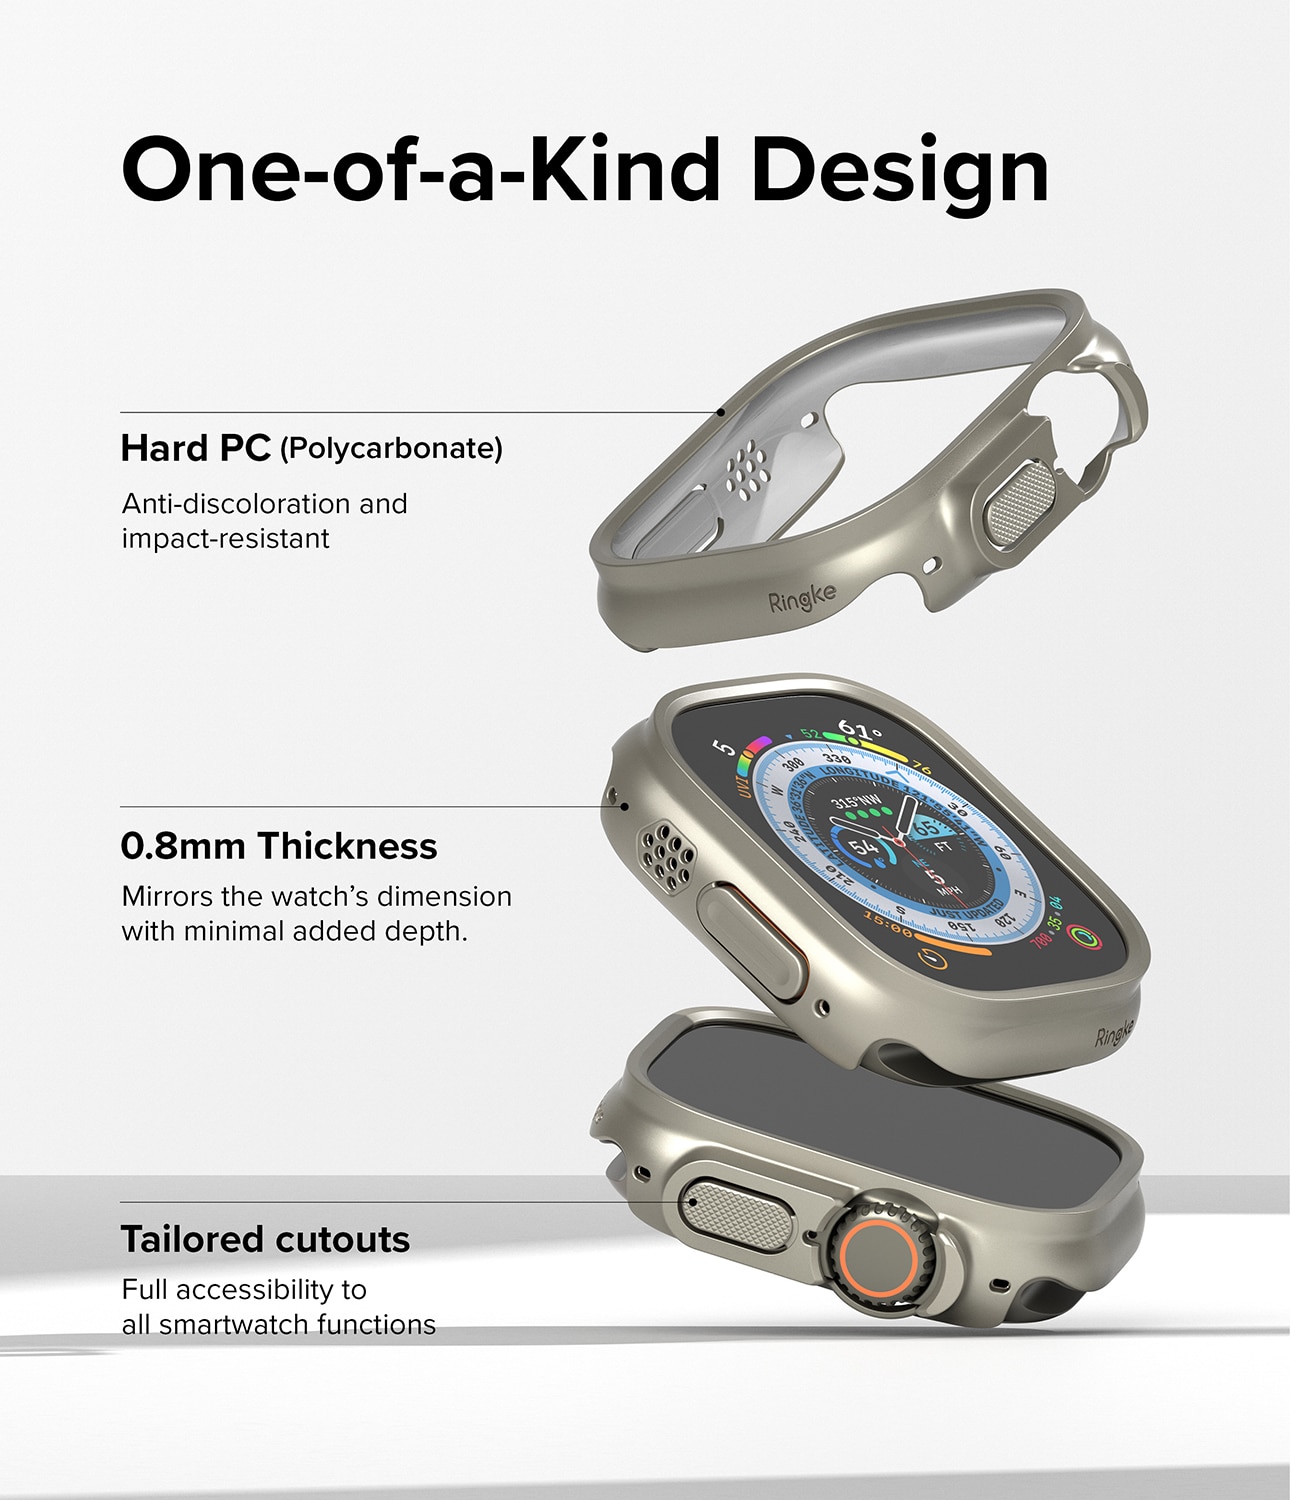 Funda Slim (2 piezas) Apple Watch Ultra 49mm Titanium Gray & Clear